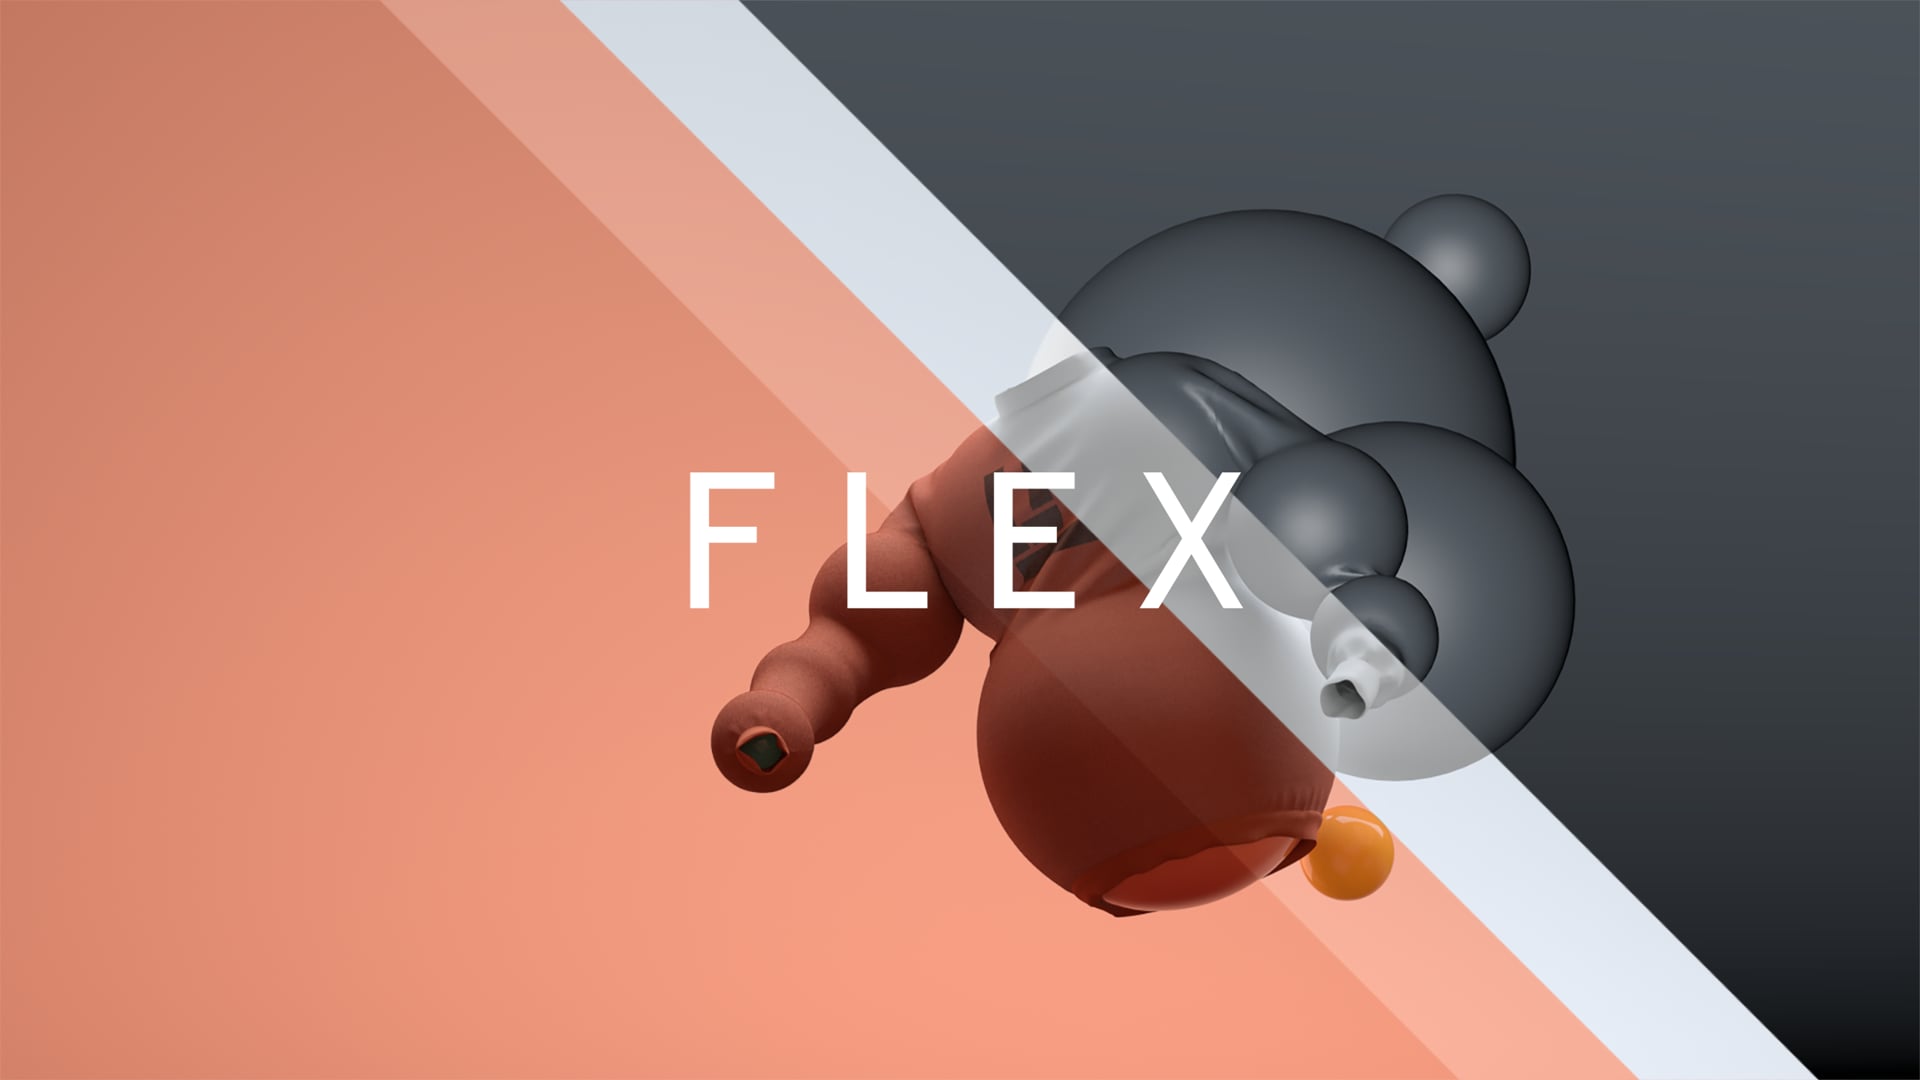 FLEX PROCESS